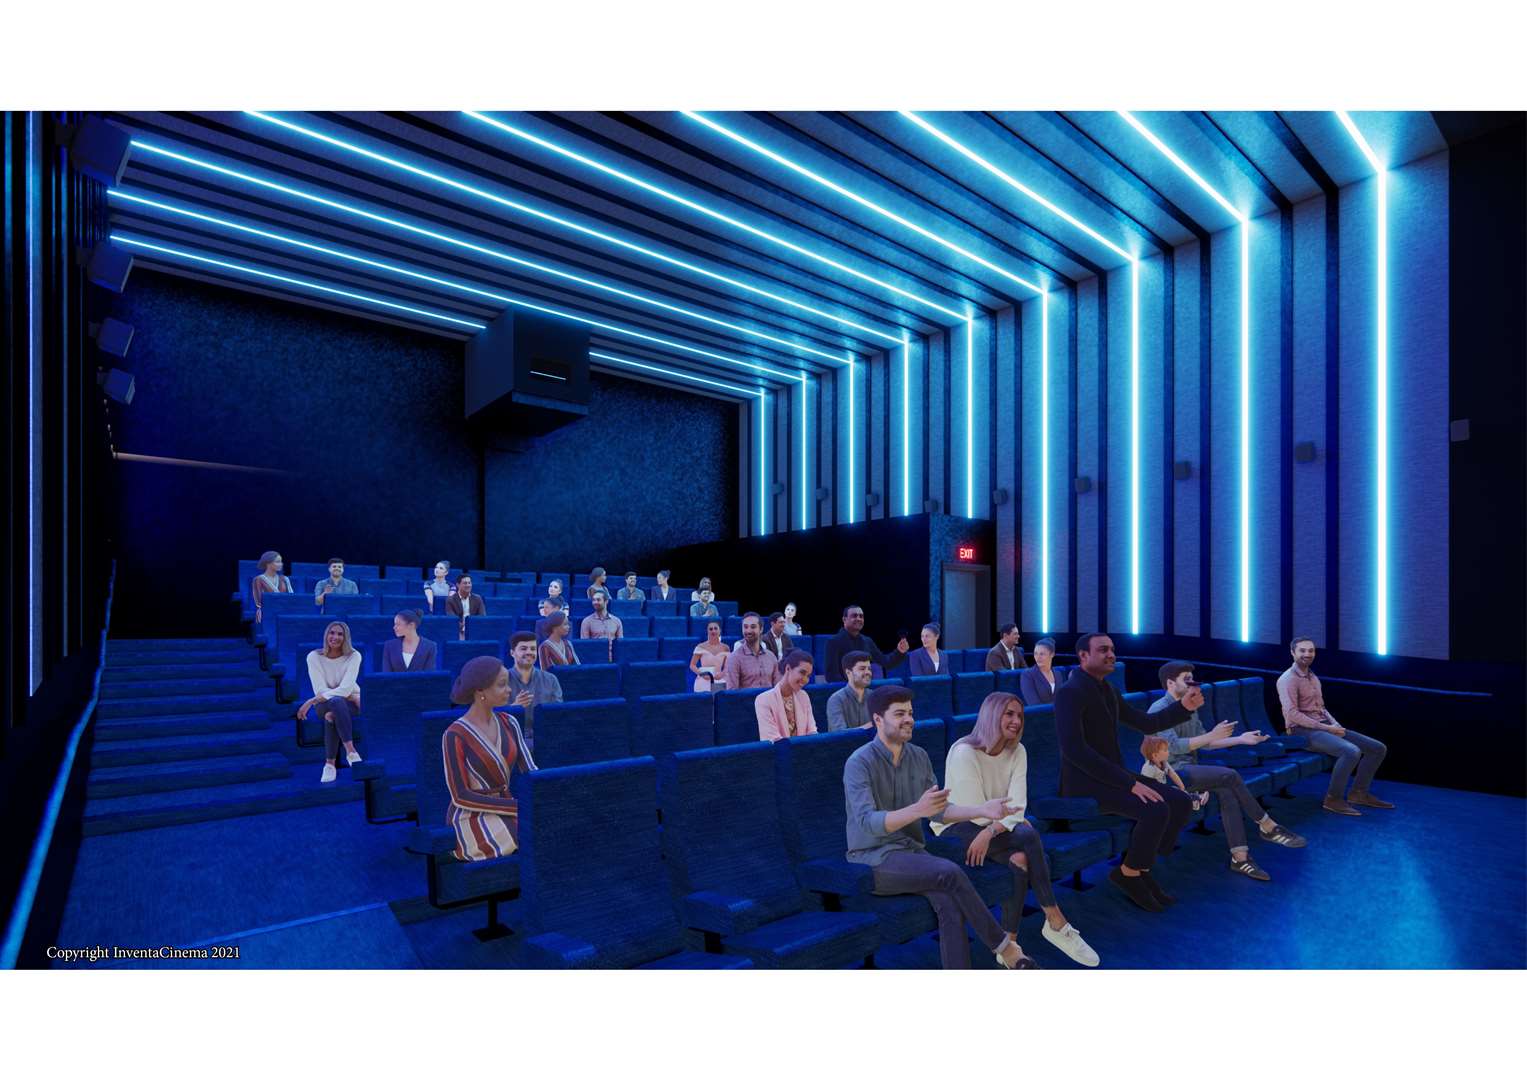 How the cinema could look according to Tenterden Cinema Ltd